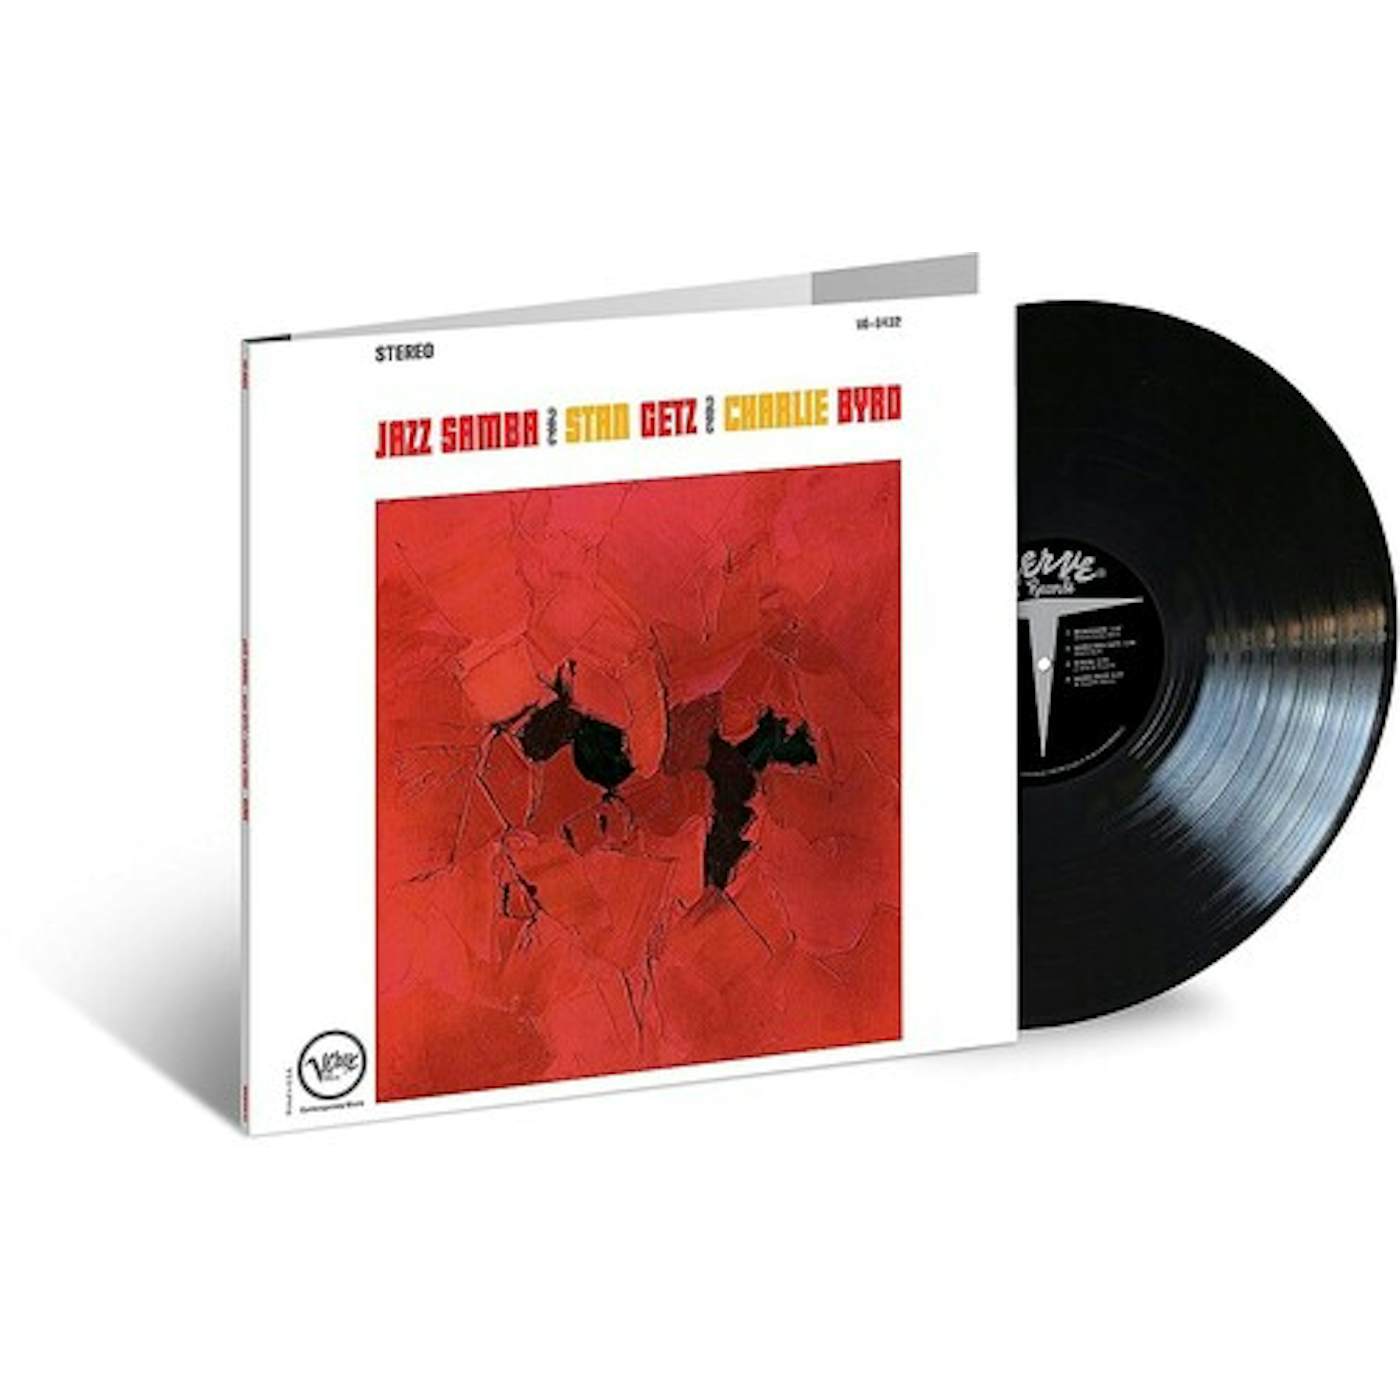 Stan Getz & Charlie Byrd JAZZ SAMBA LP (VERVE ACOUSTIC SOUNDS SERIES) Vinyl Record